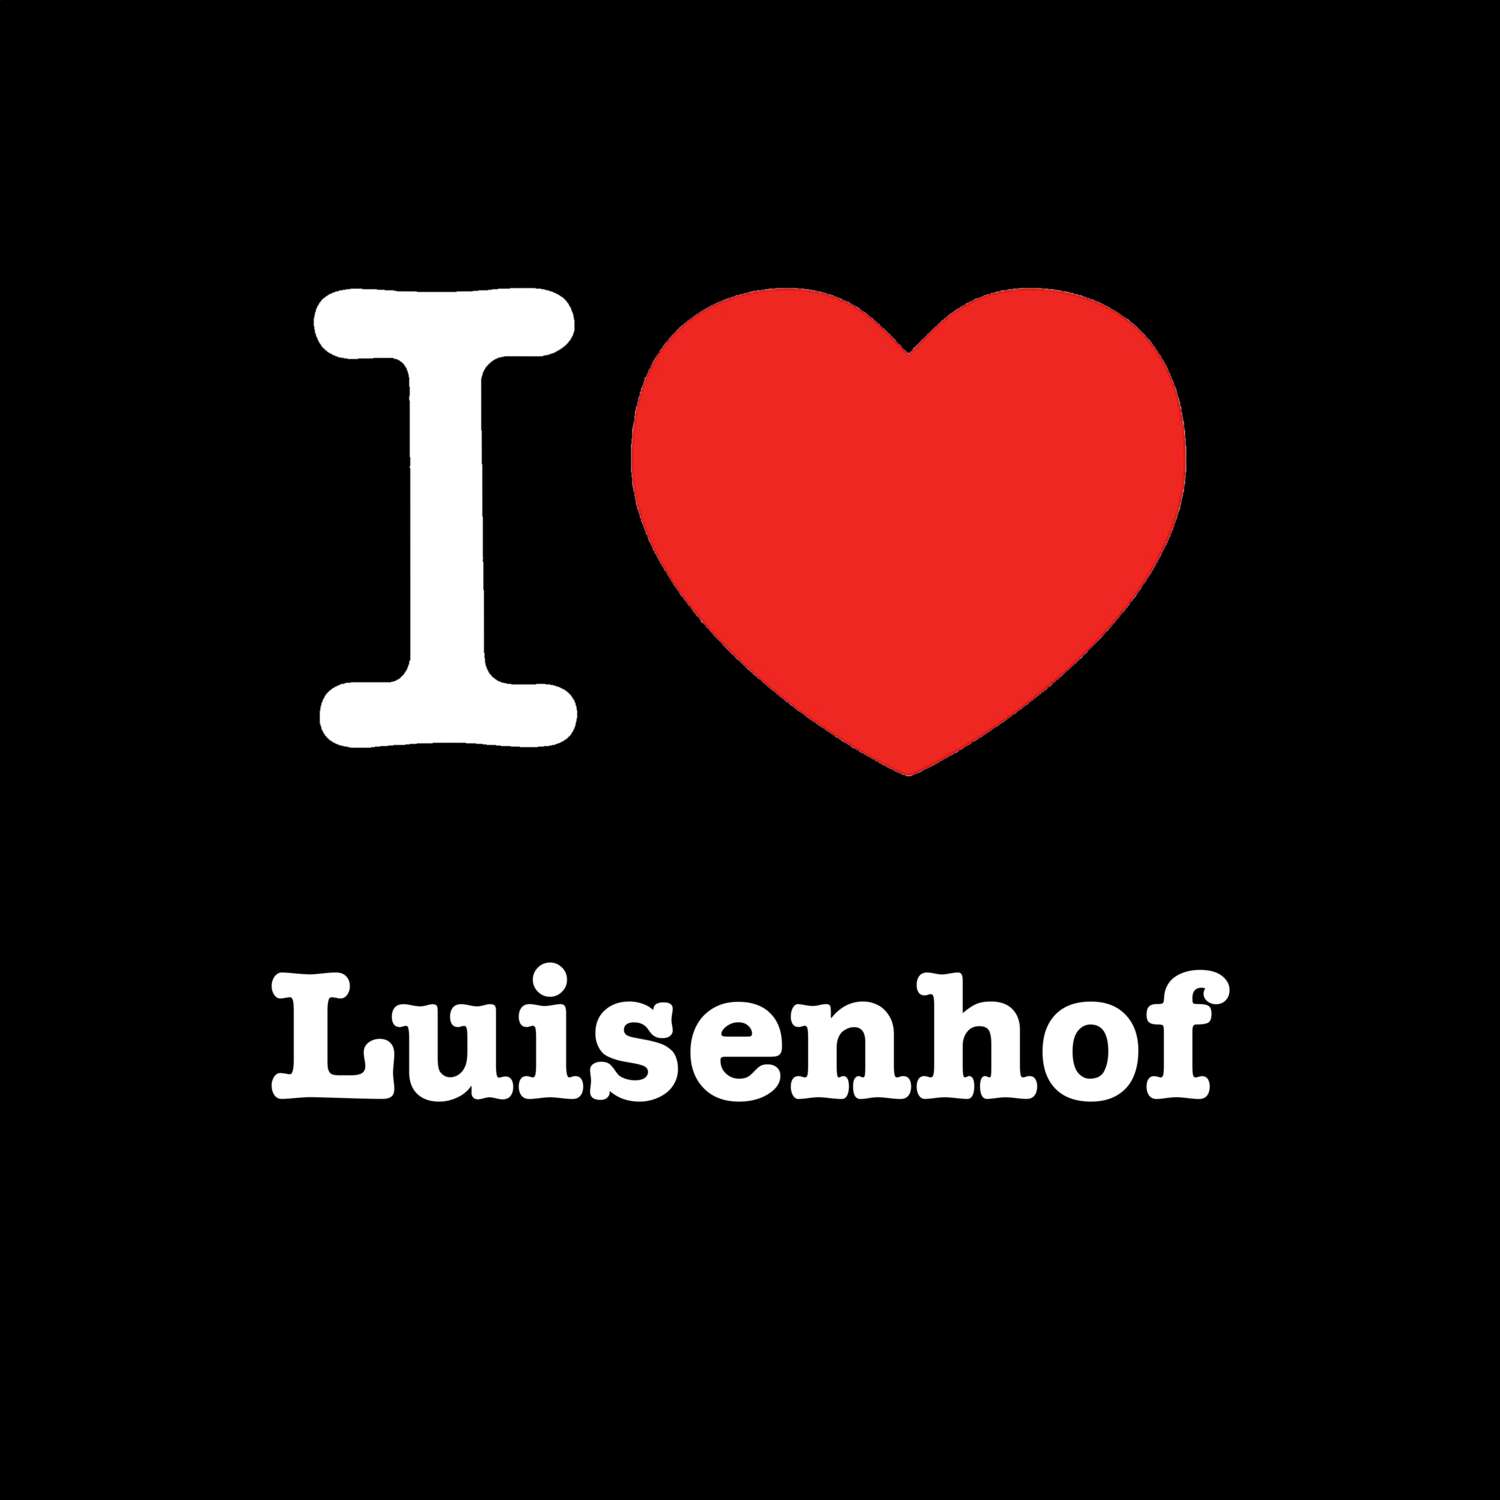 Luisenhof T-Shirt »I love«